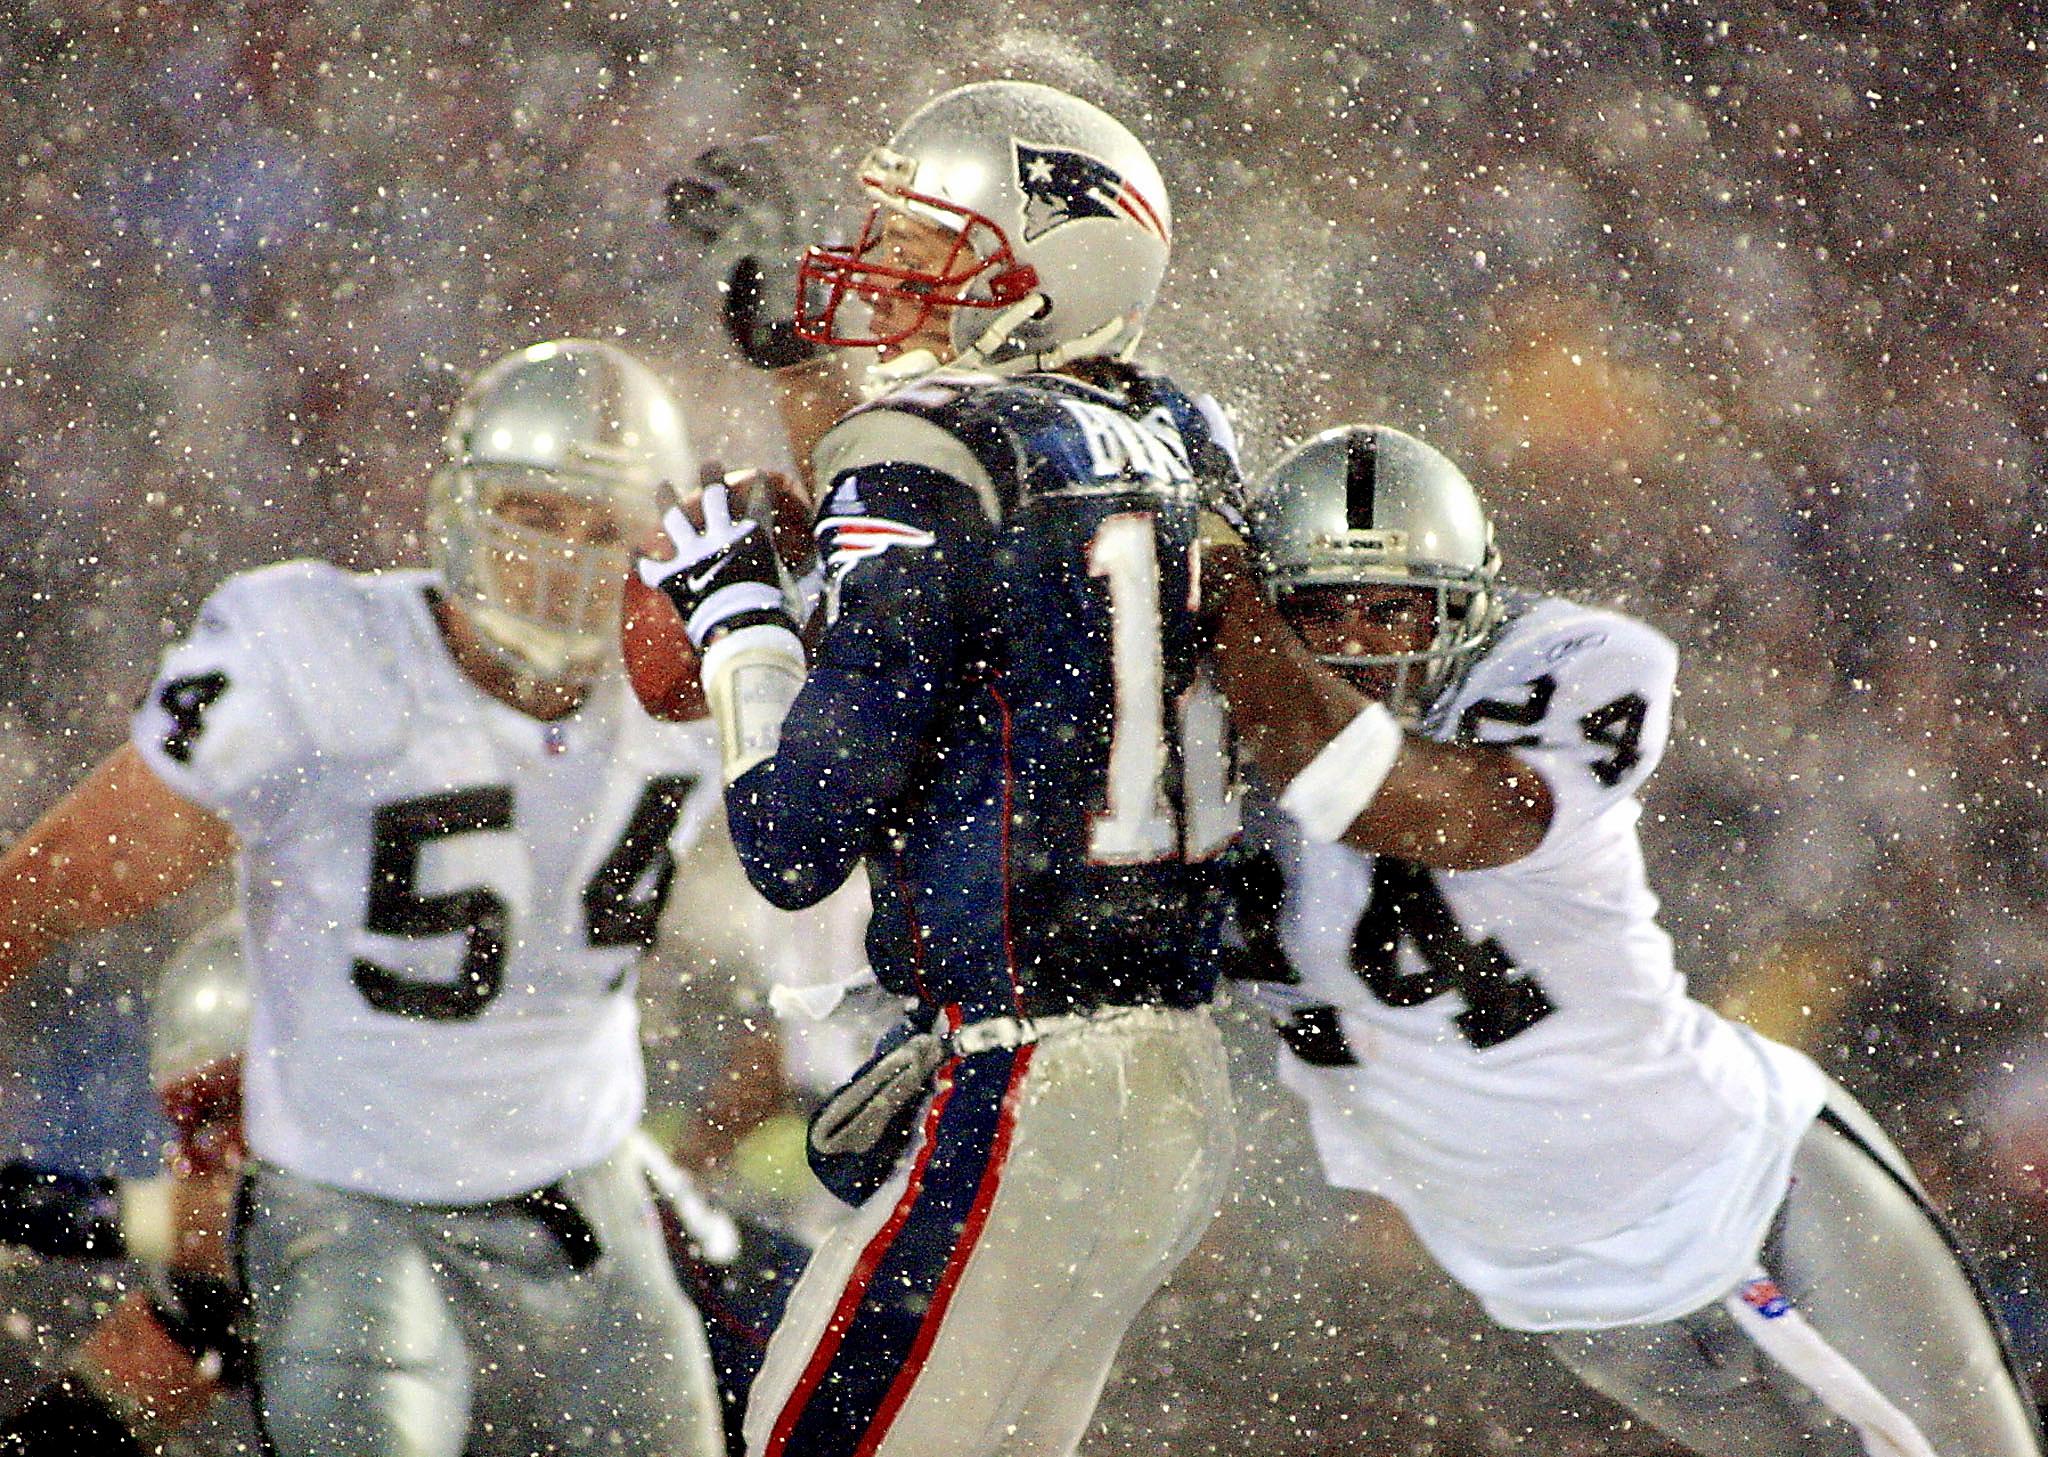 Raiders DB Charles Woodson hits Patriots QB Tom Brady during the Tuck Rule game.